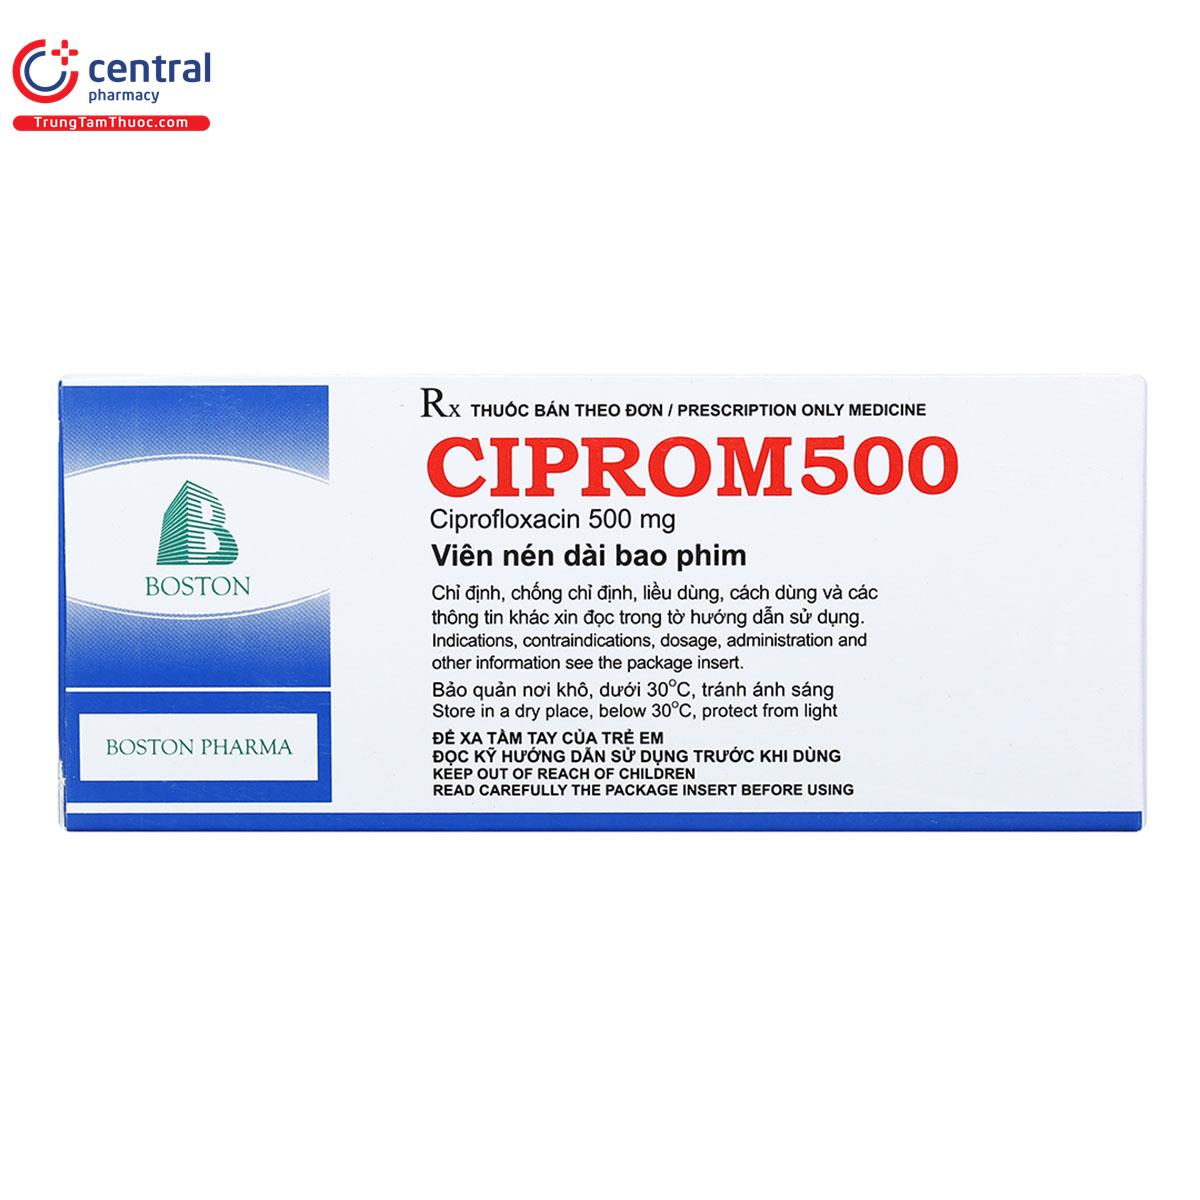 ciprom 500 11 I3565